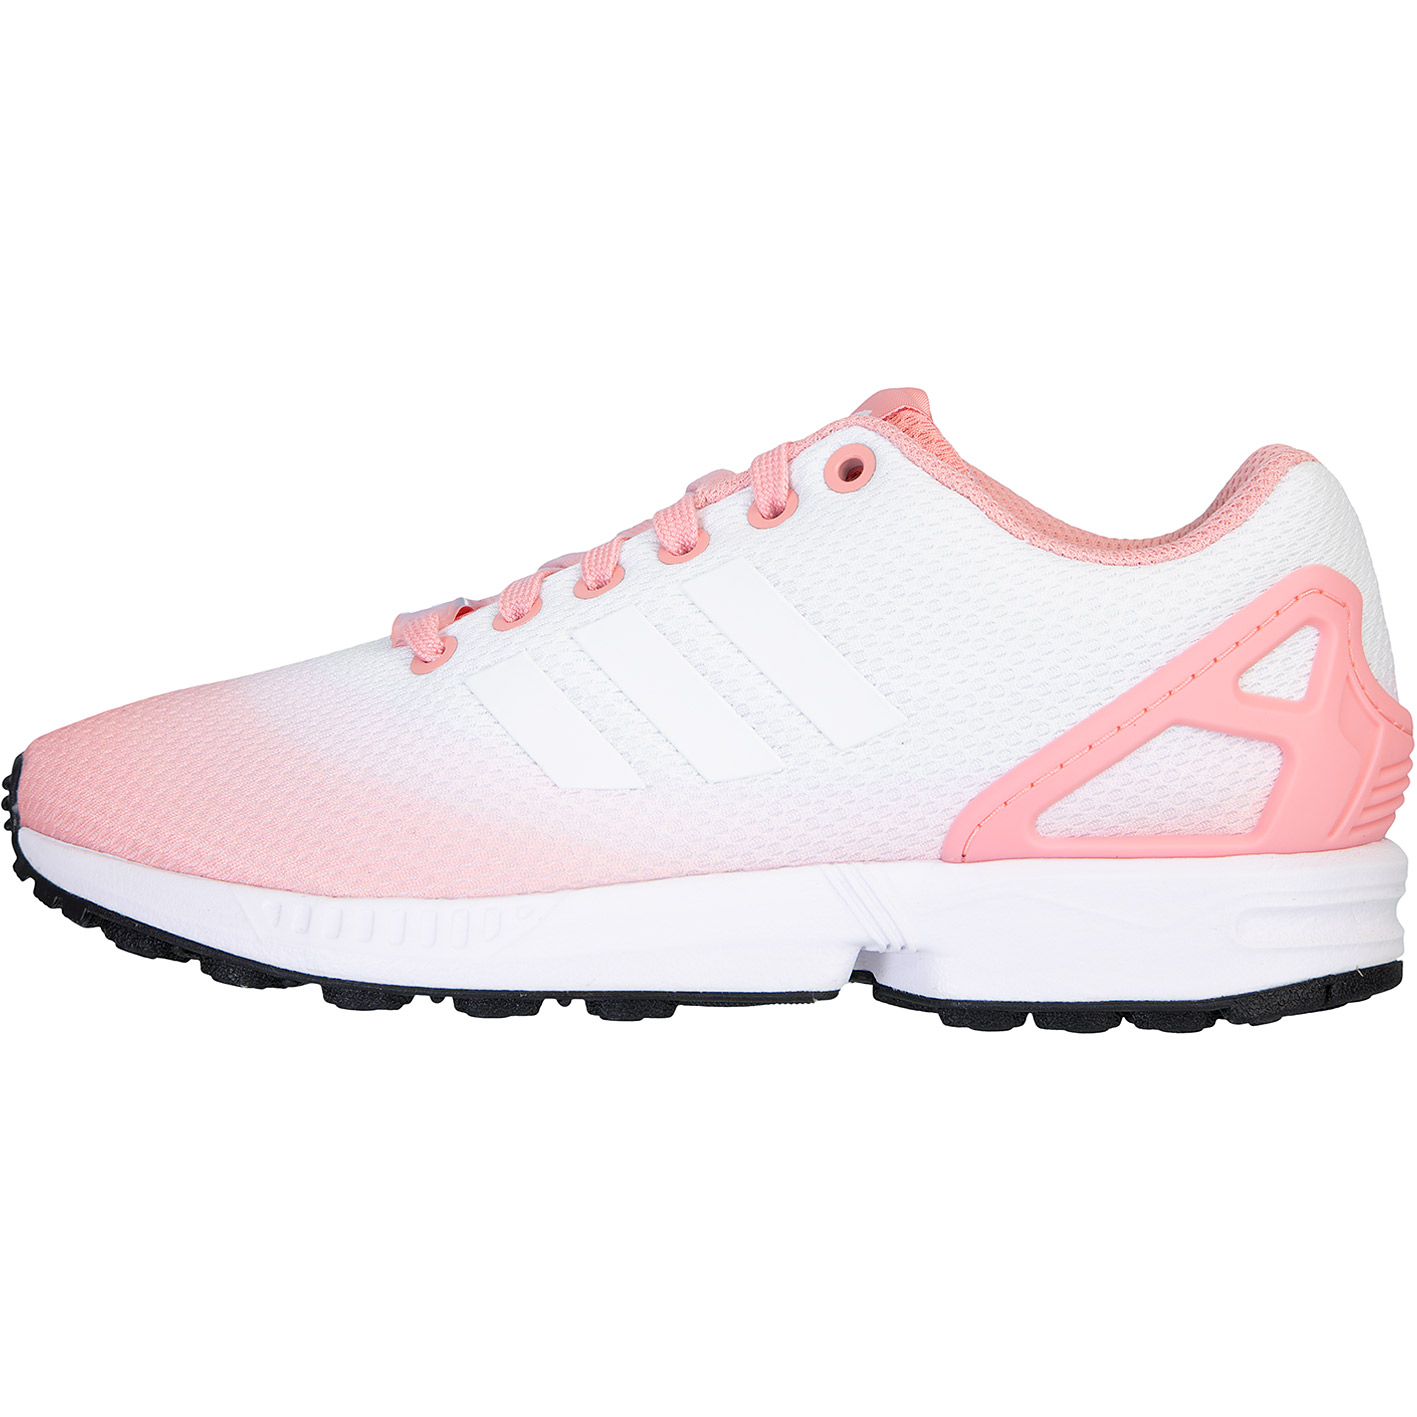 ☆ Adidas Flux Damen Sneaker rosa/weiß - hier bestellen!